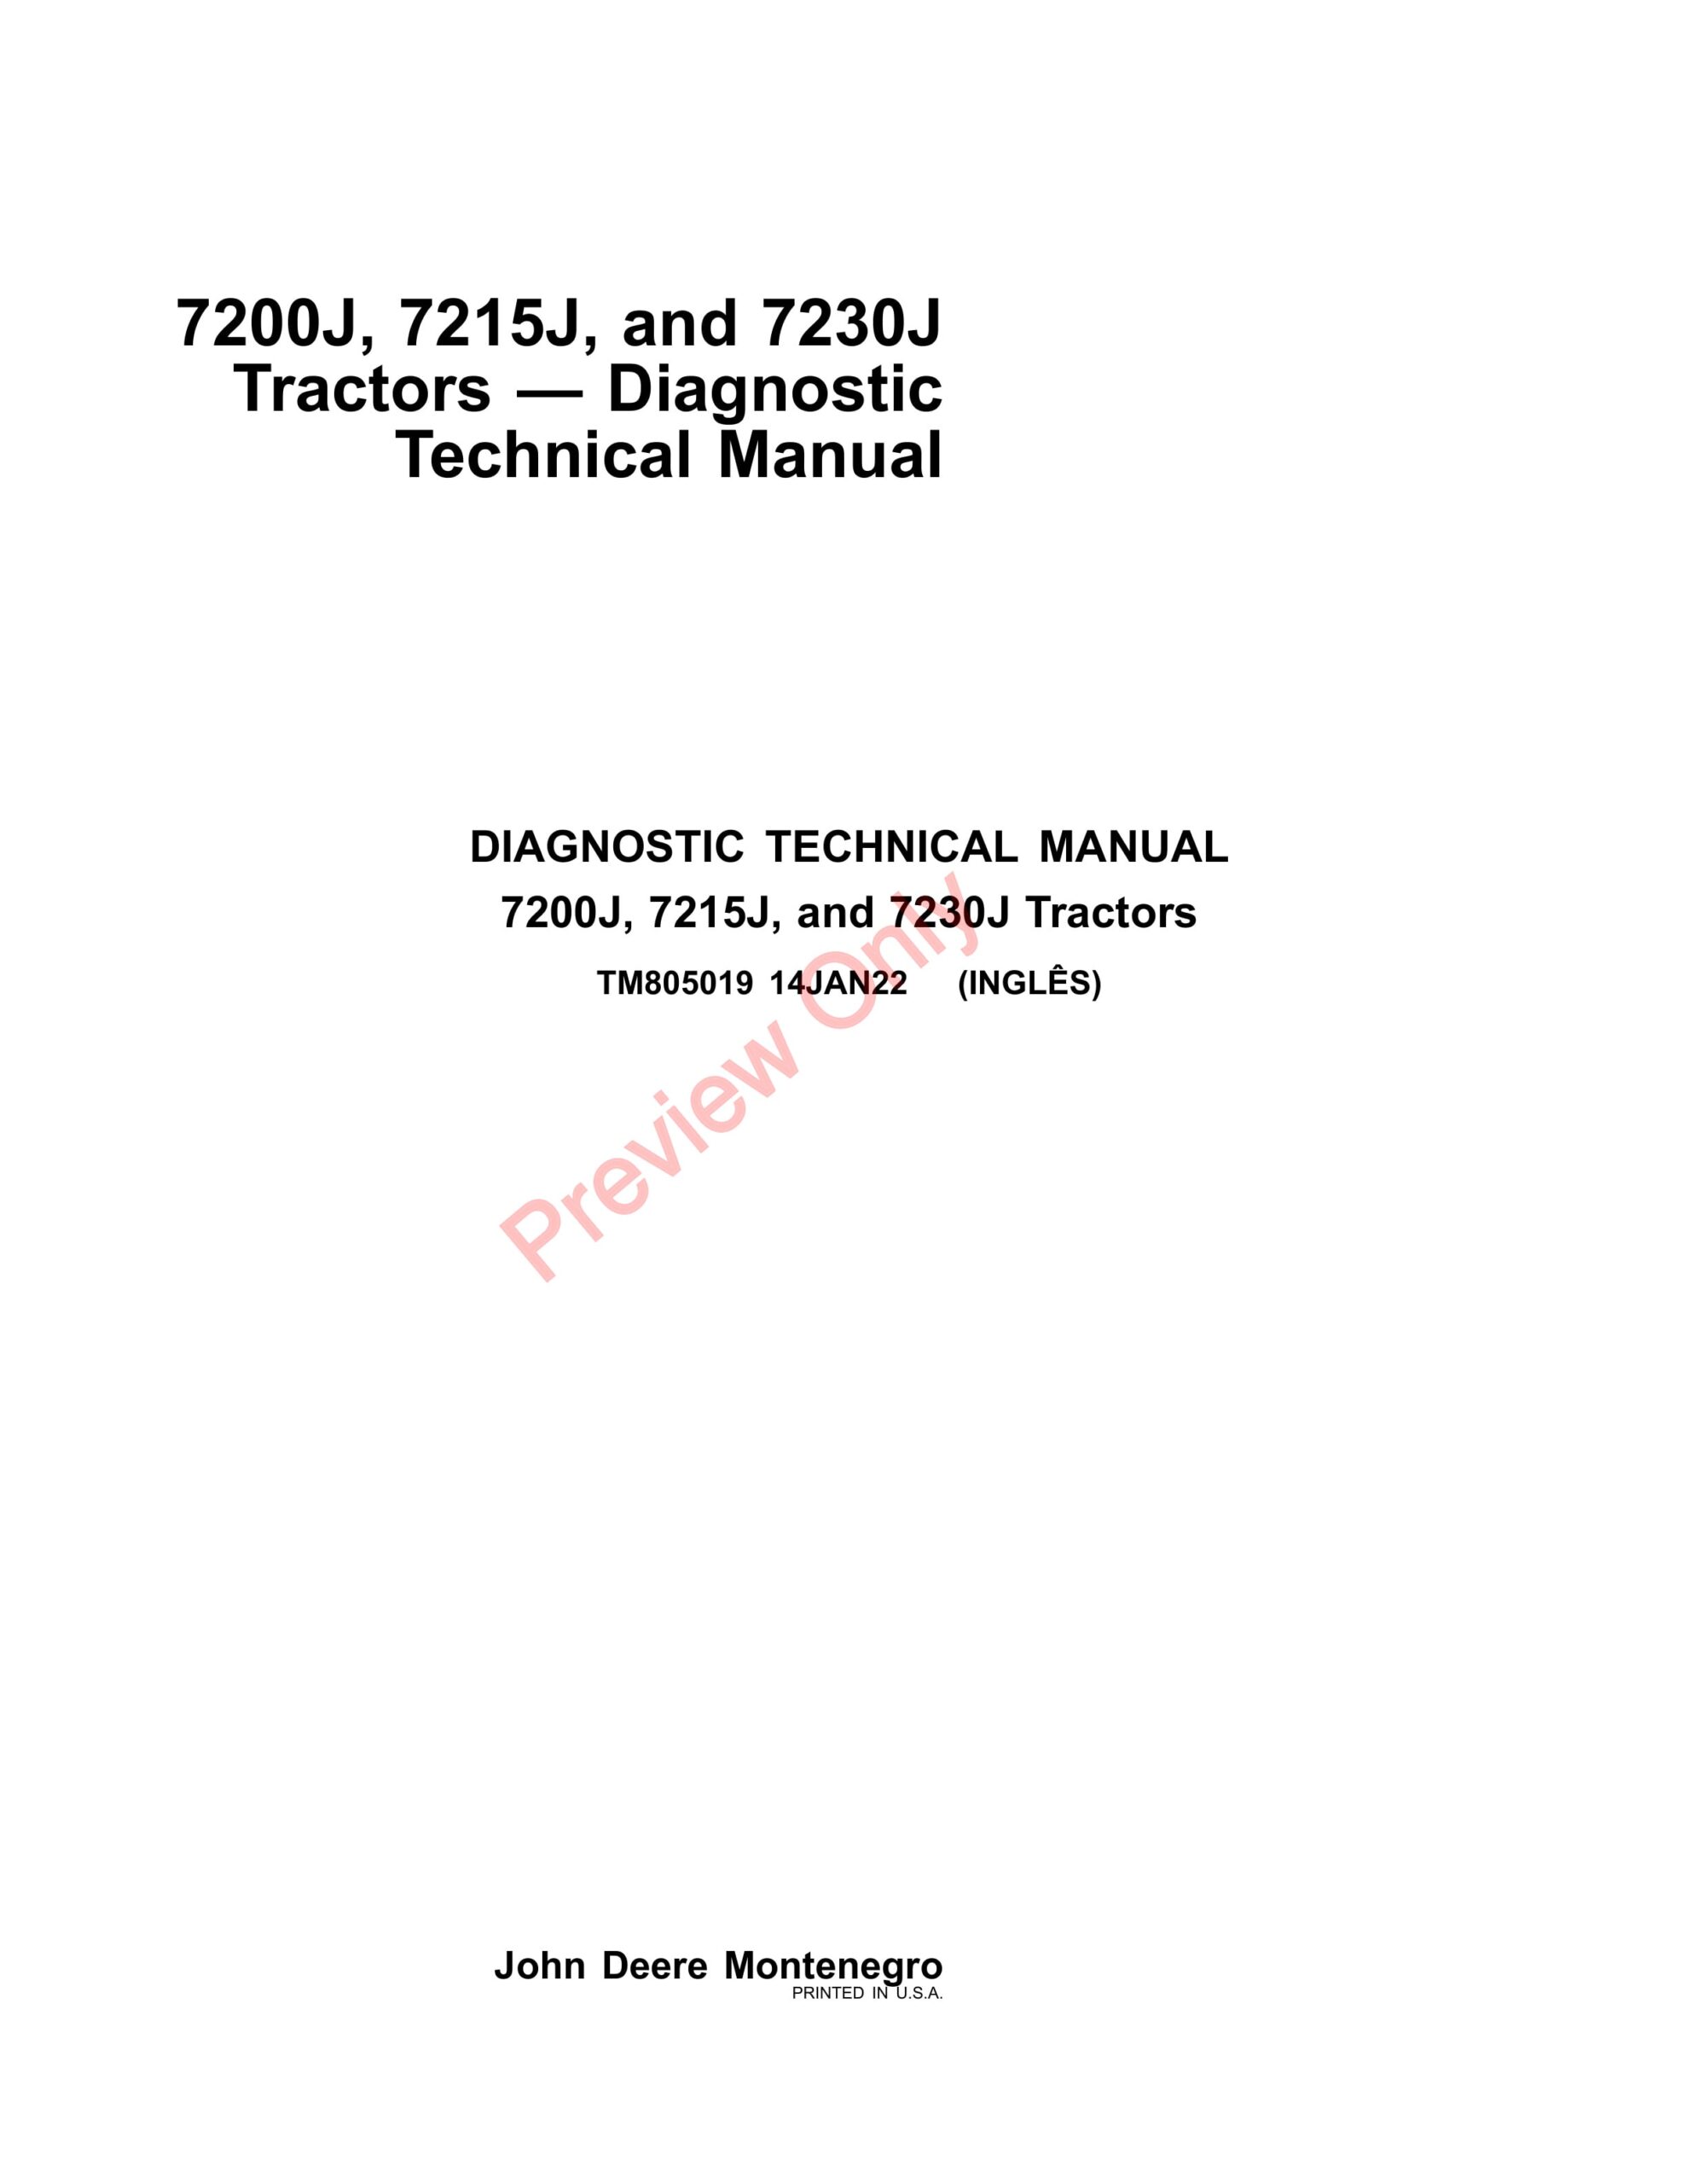 John Deere 7200J, 7215J, and 7230J Tractors Diagnostic Technical Manual TM805019 14JAN22-1